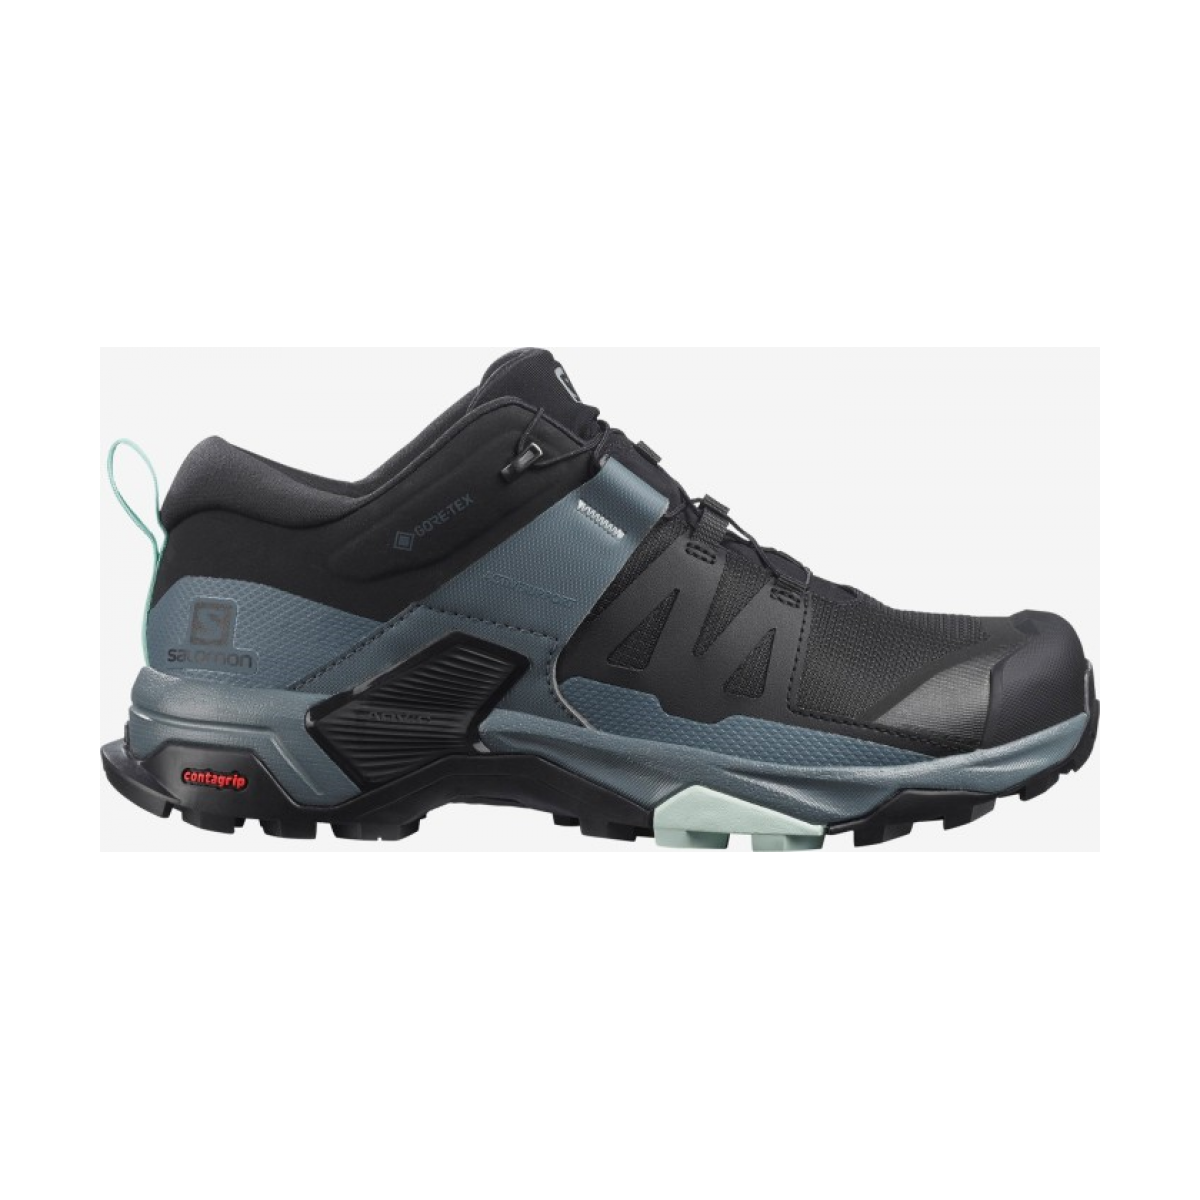 SALOMON X ULTRA 4 GTX W black/blue trail running shoes